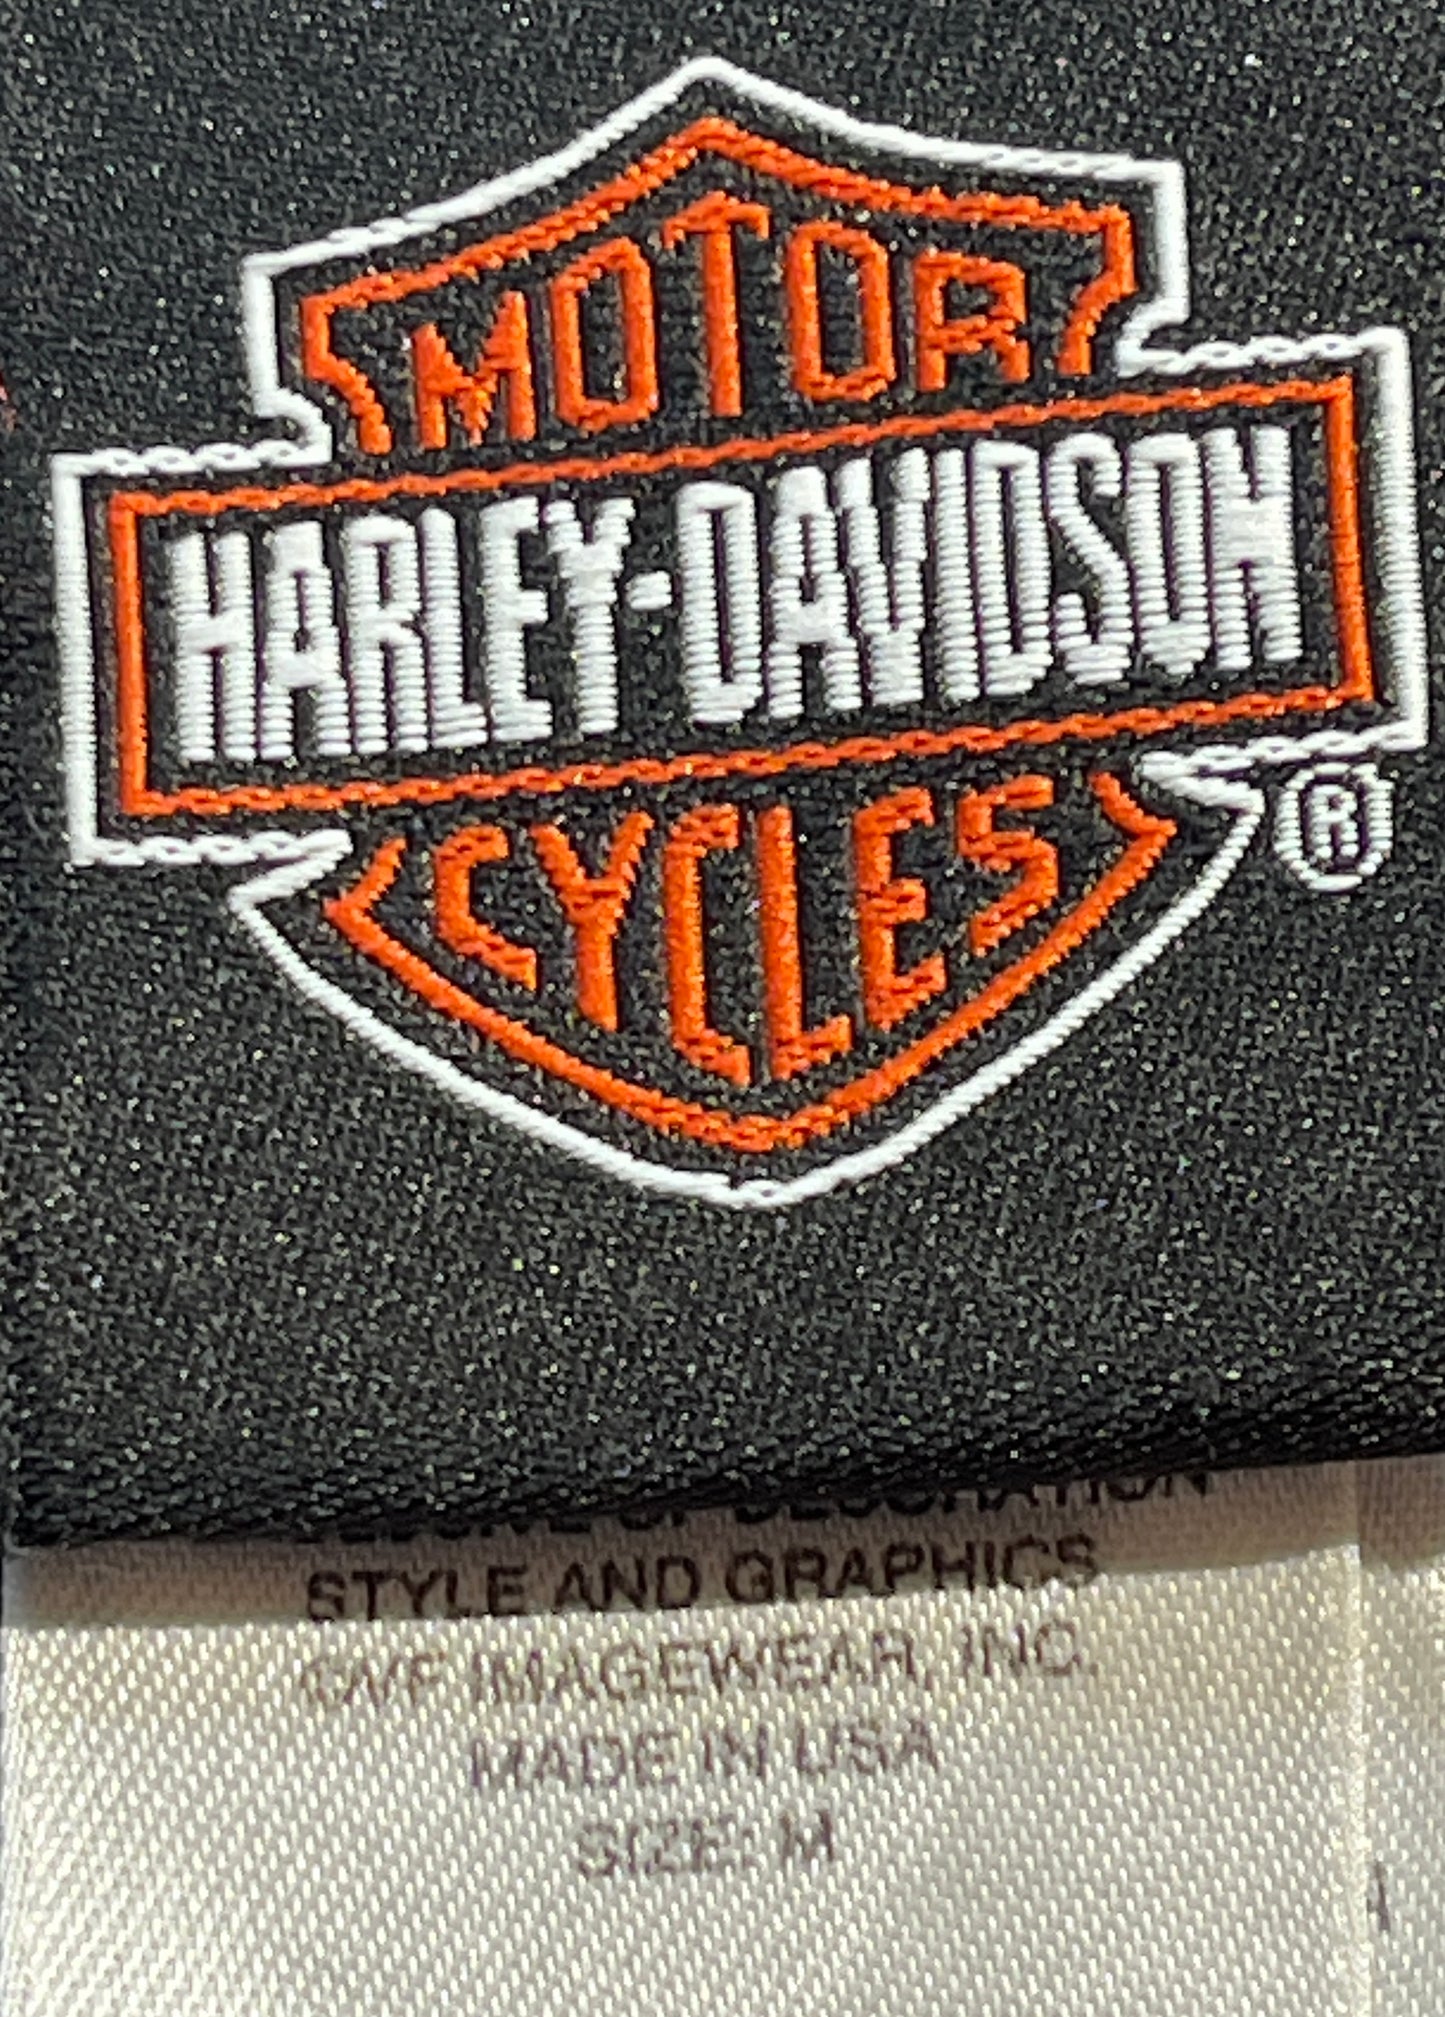 Vintage Harley Davidson Tank Top Shirt